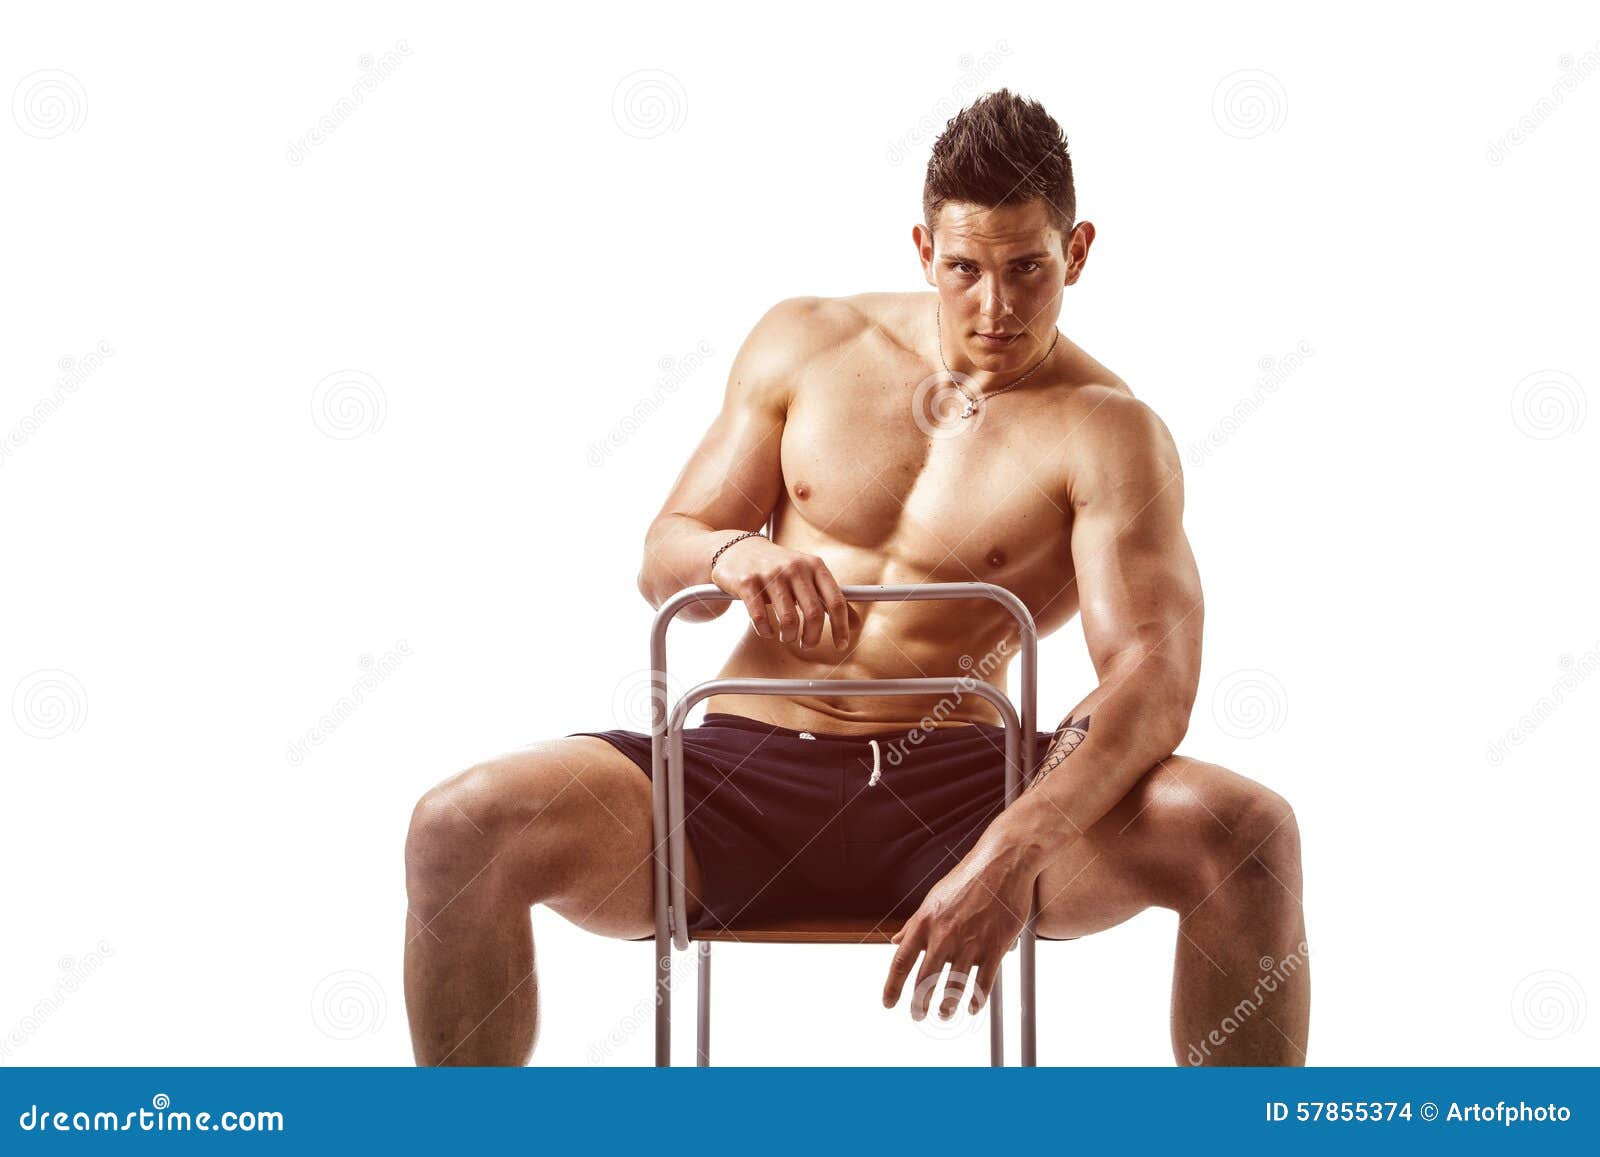 Мужчина сидит расставив ноги. Накаченный мужчина сидит. Мускулистый мужчина на стуле. Мужчина сидит торс.